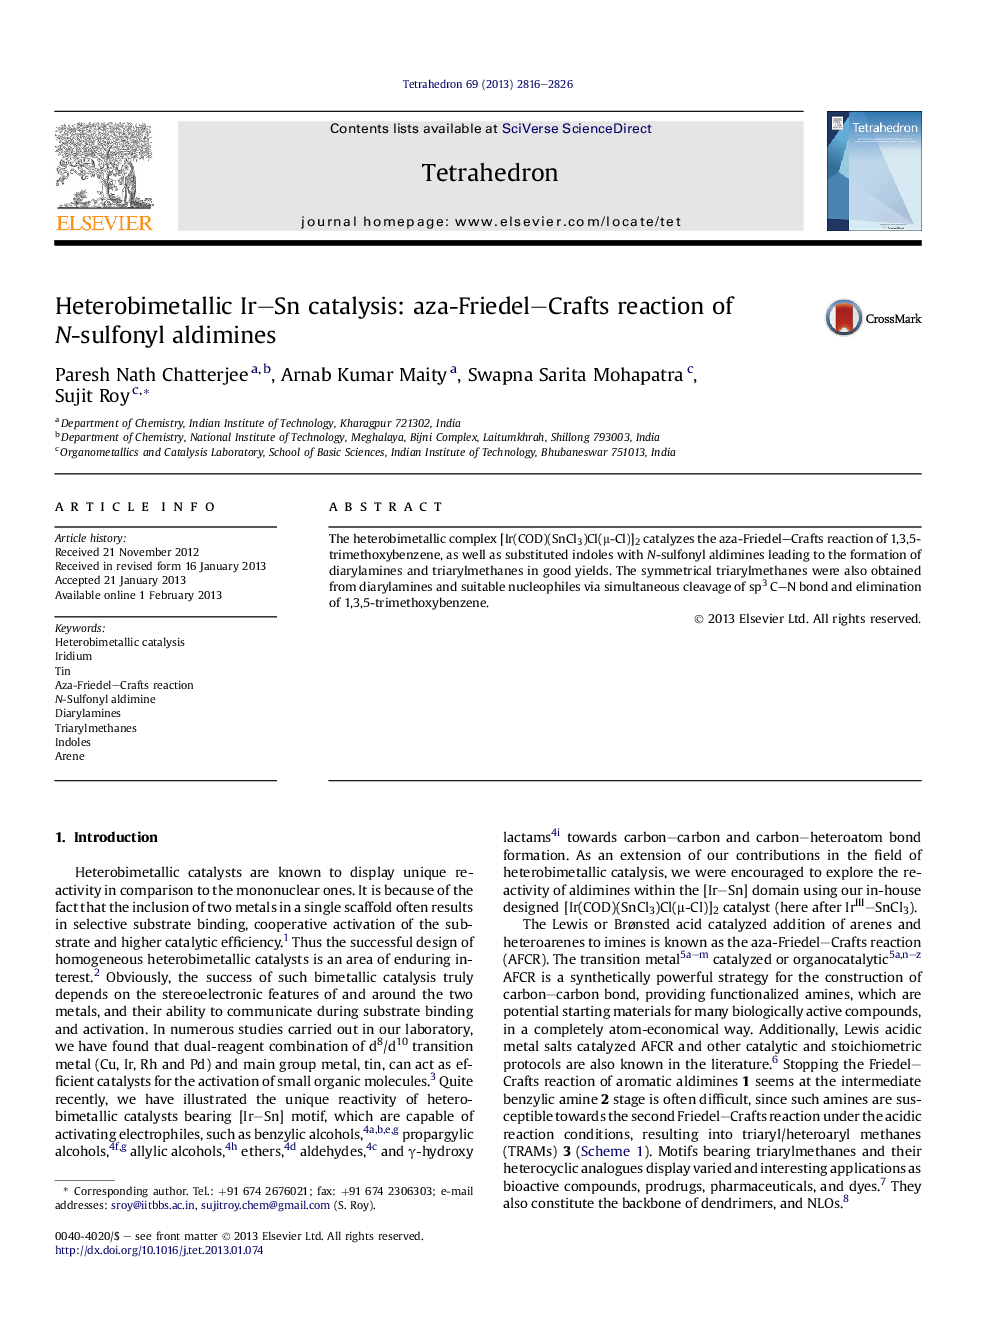 Heterobimetallic Ir-Sn catalysis: aza-Friedel-Crafts reaction of N-sulfonyl aldimines